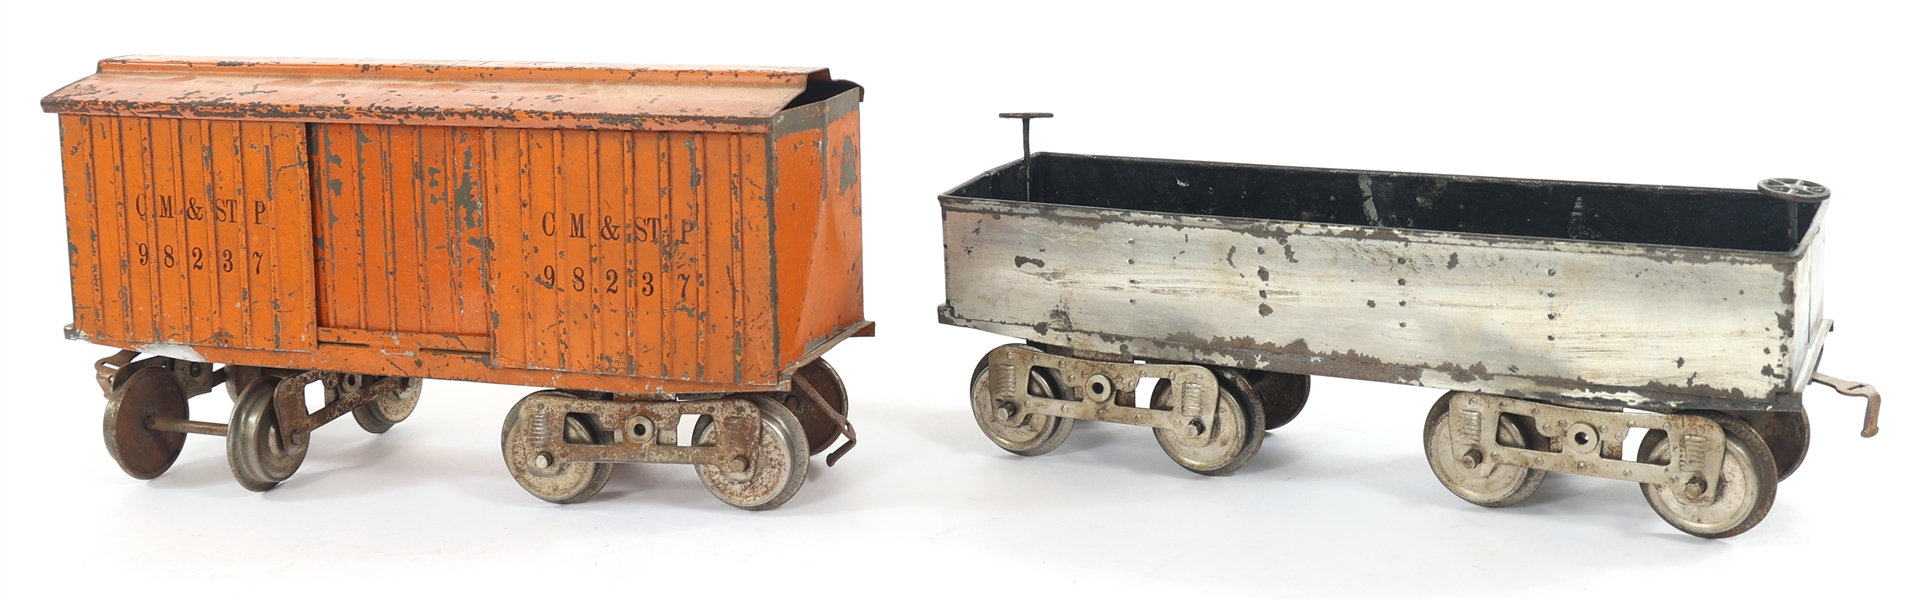 LIONEL G GAUGE MODEL TRAIN CARS - LOT OF TWO